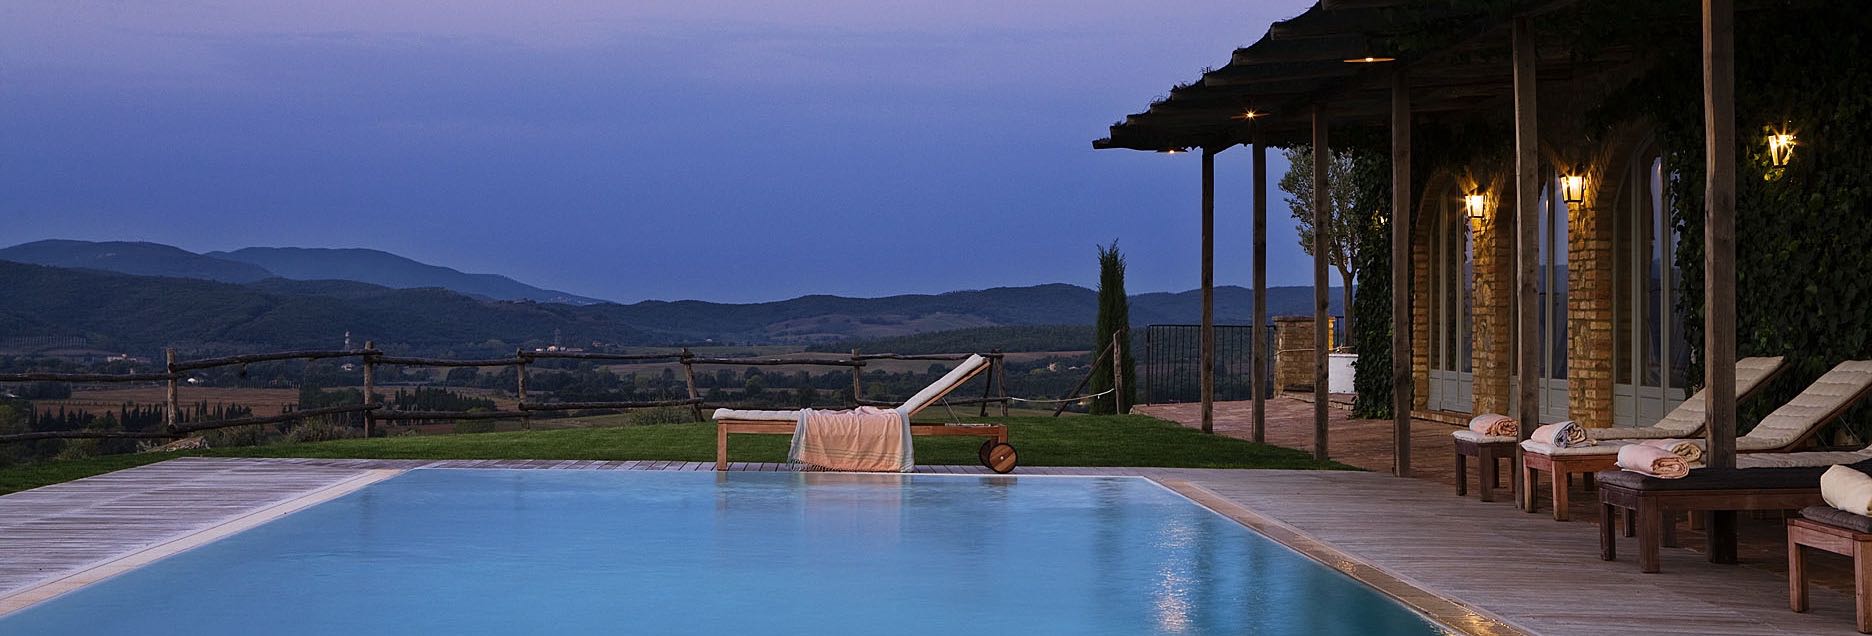 Holiday villas in tuscany